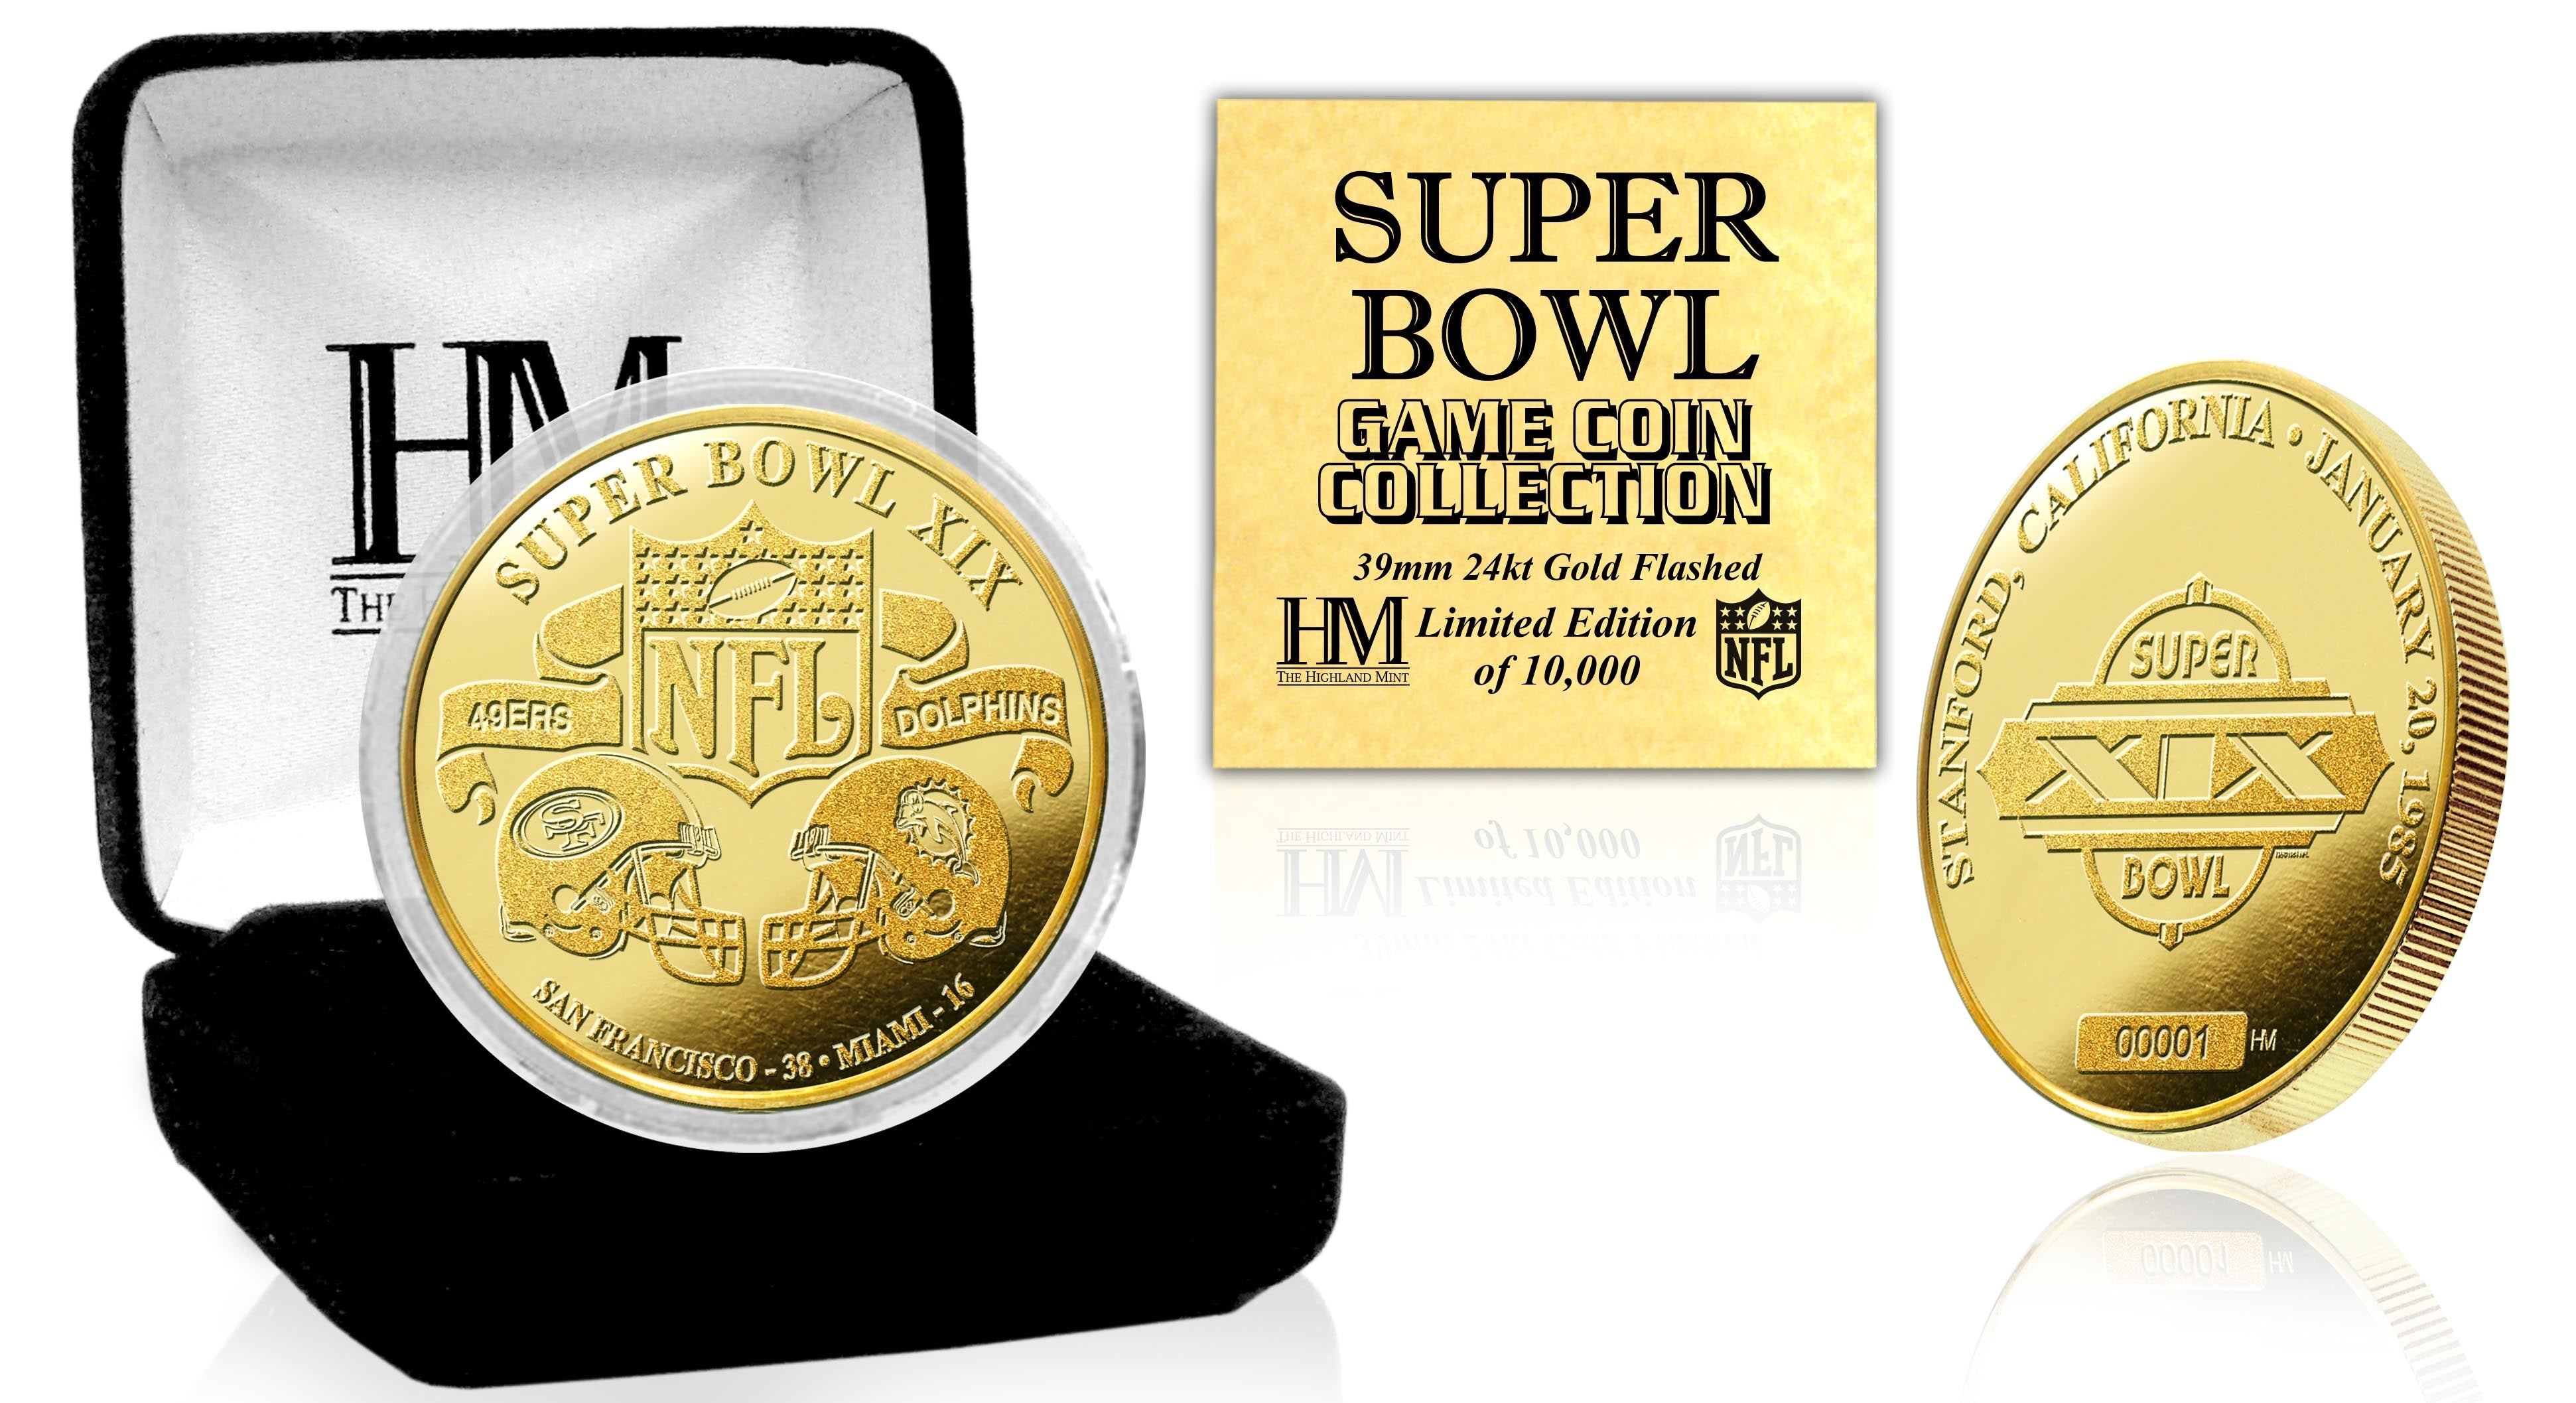 Super Bowl XIX 24kt Gold Flip Coin